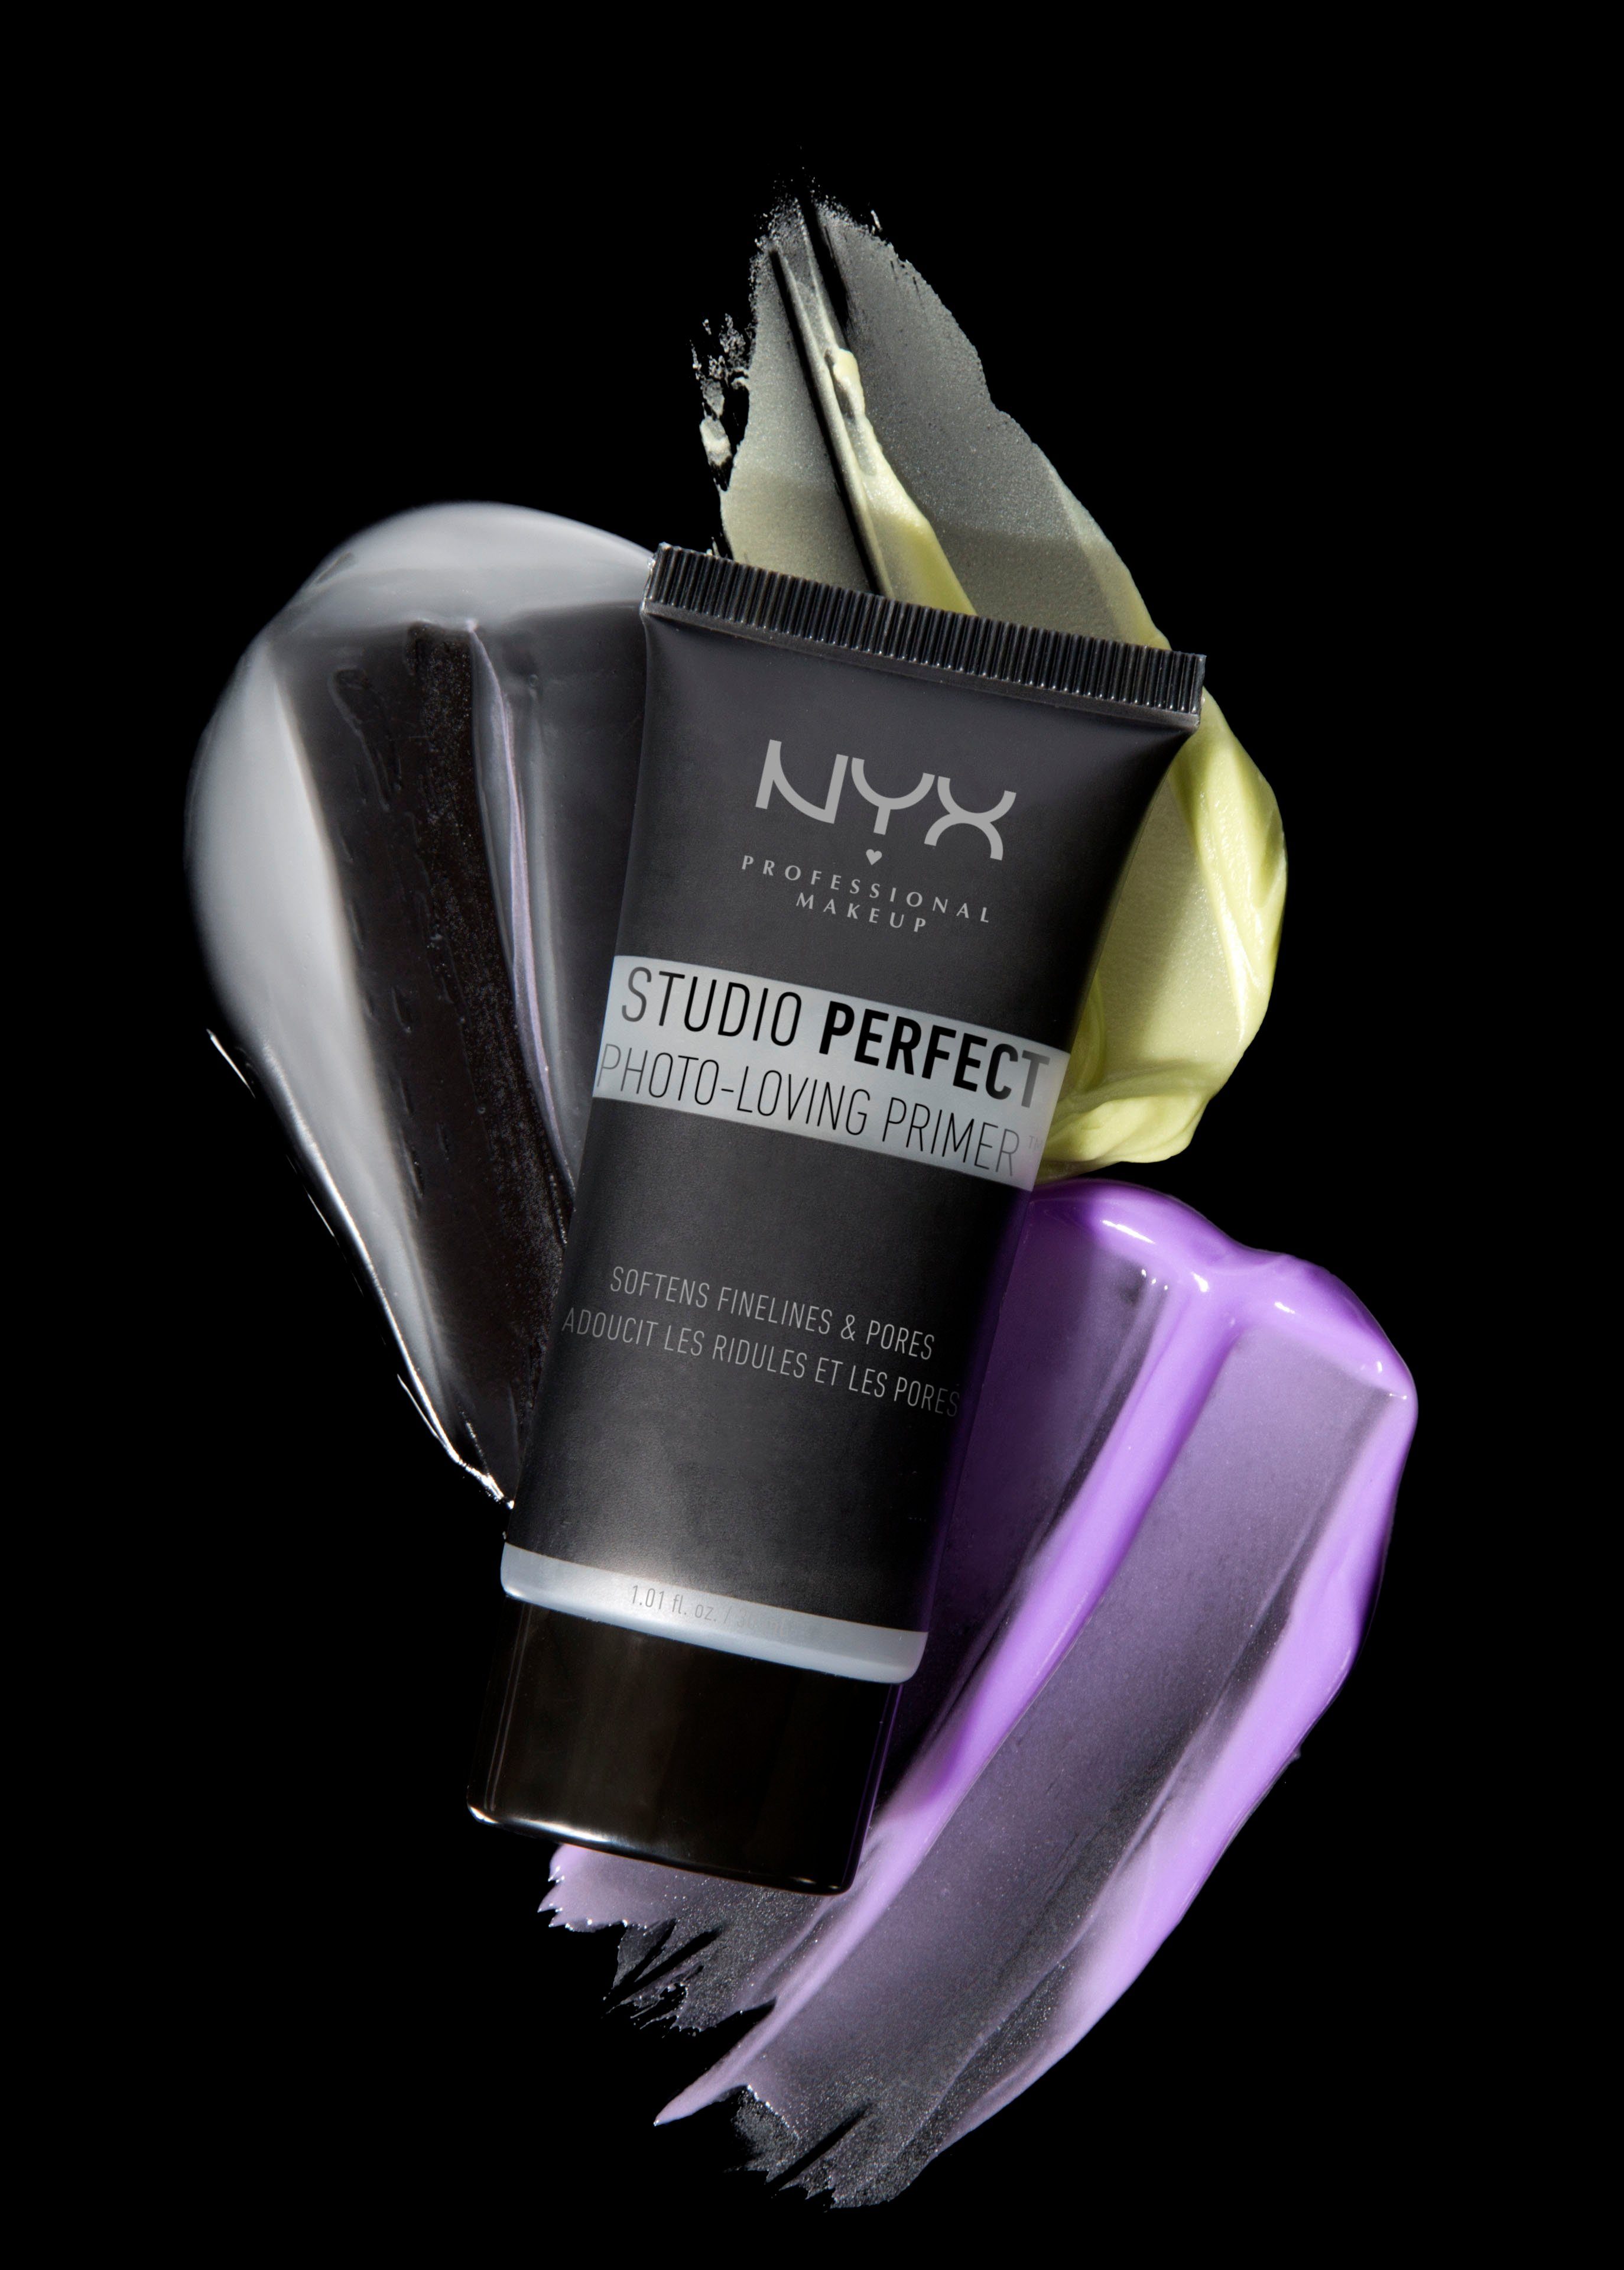 Professional NYX Perfect Primer Studio NYX Makeup Primer